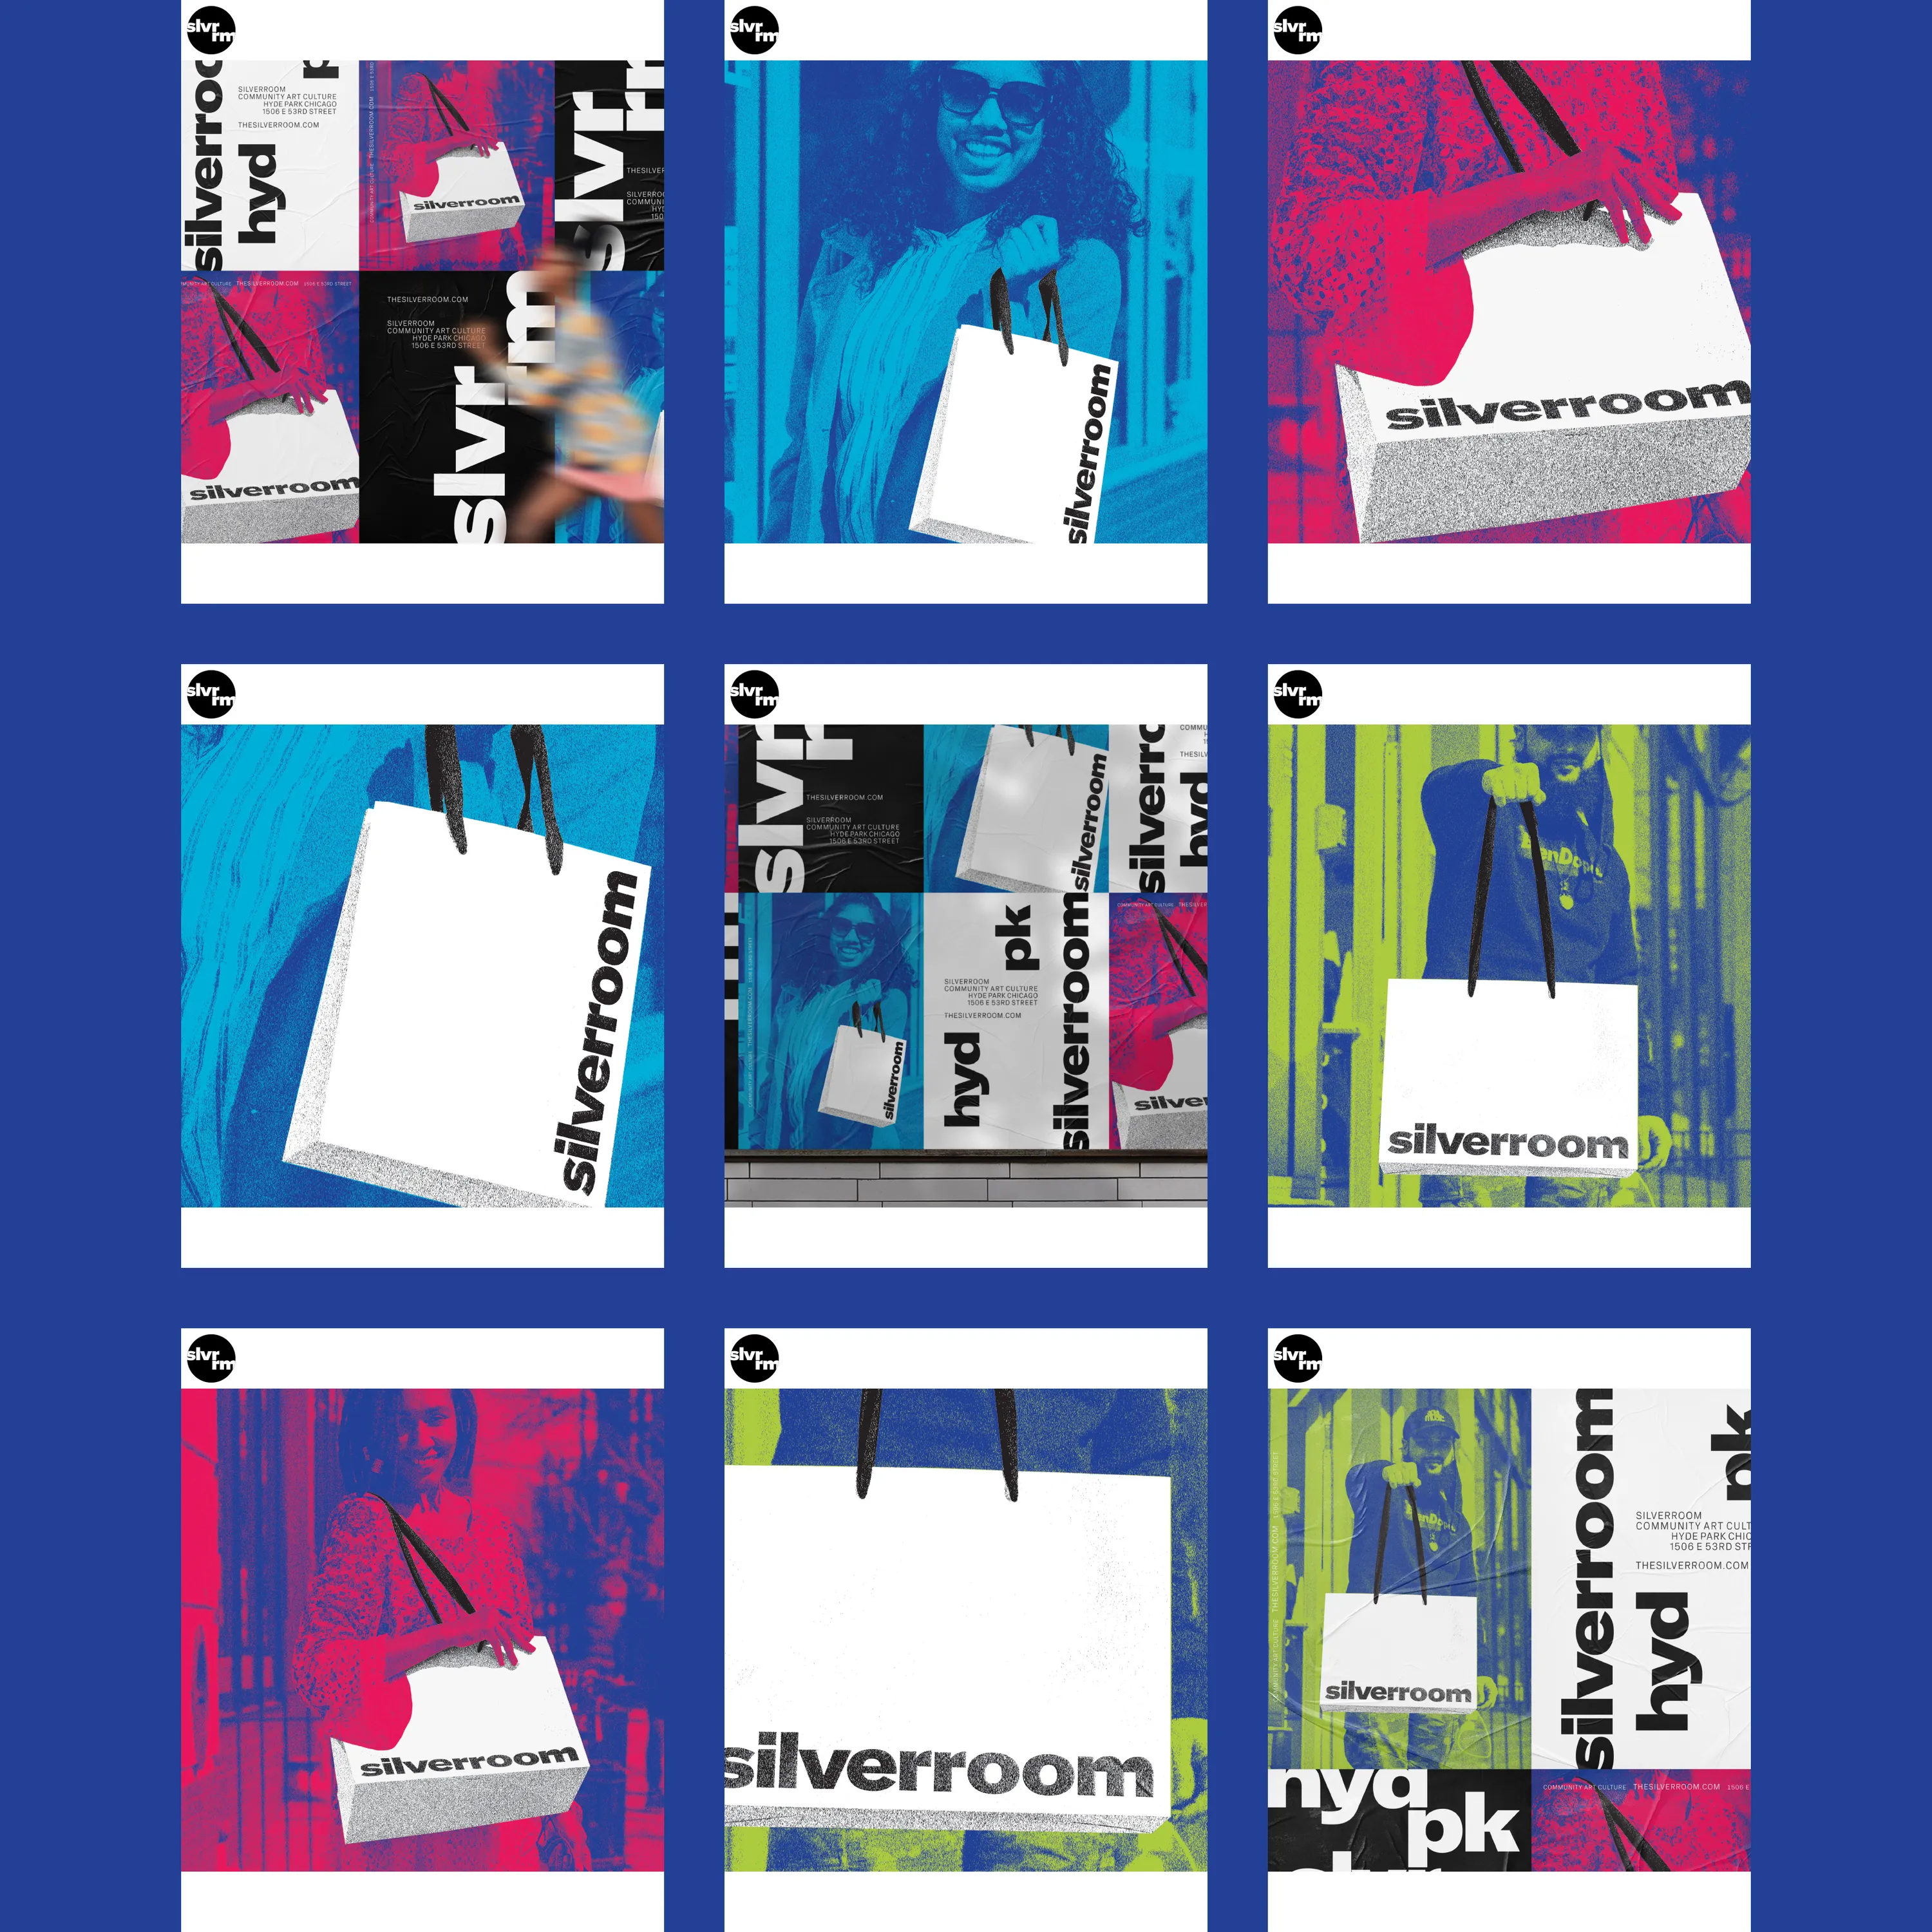 Silverroom Graphic Design Ad Campaign Social Media Post Typography Span 05